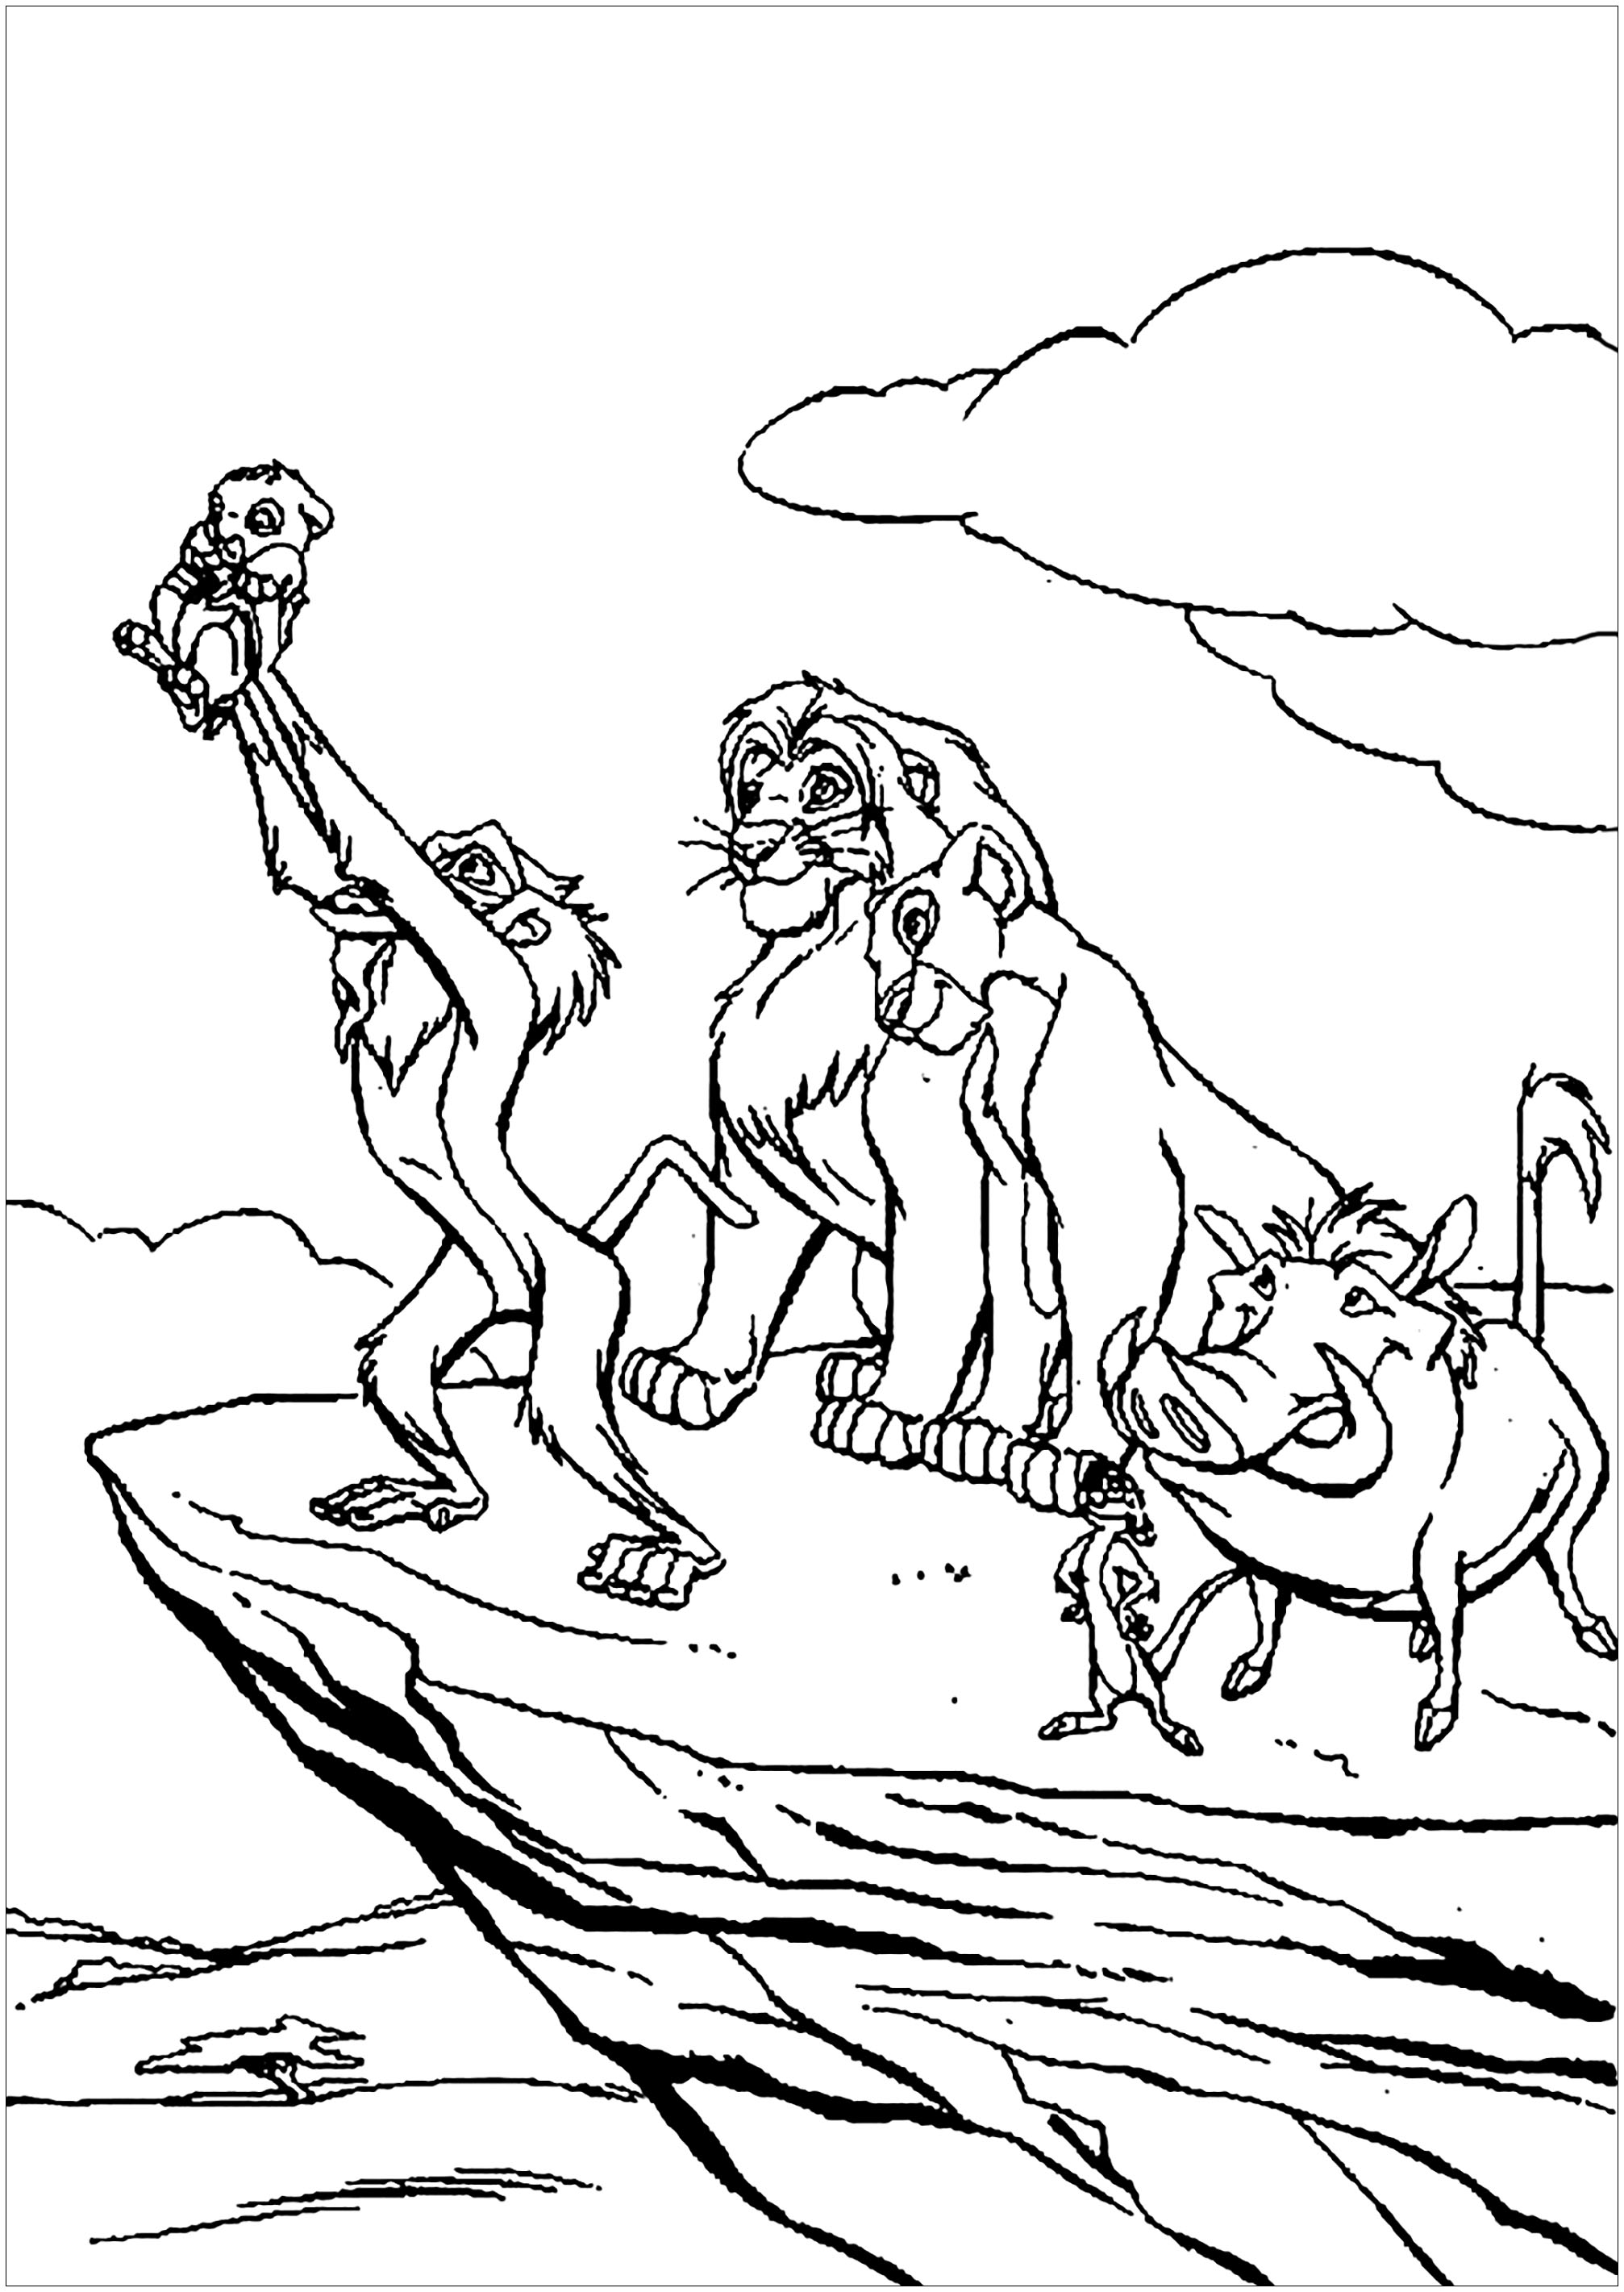 Coloriage simple du Roi Lion : Rafiki baptise Simba